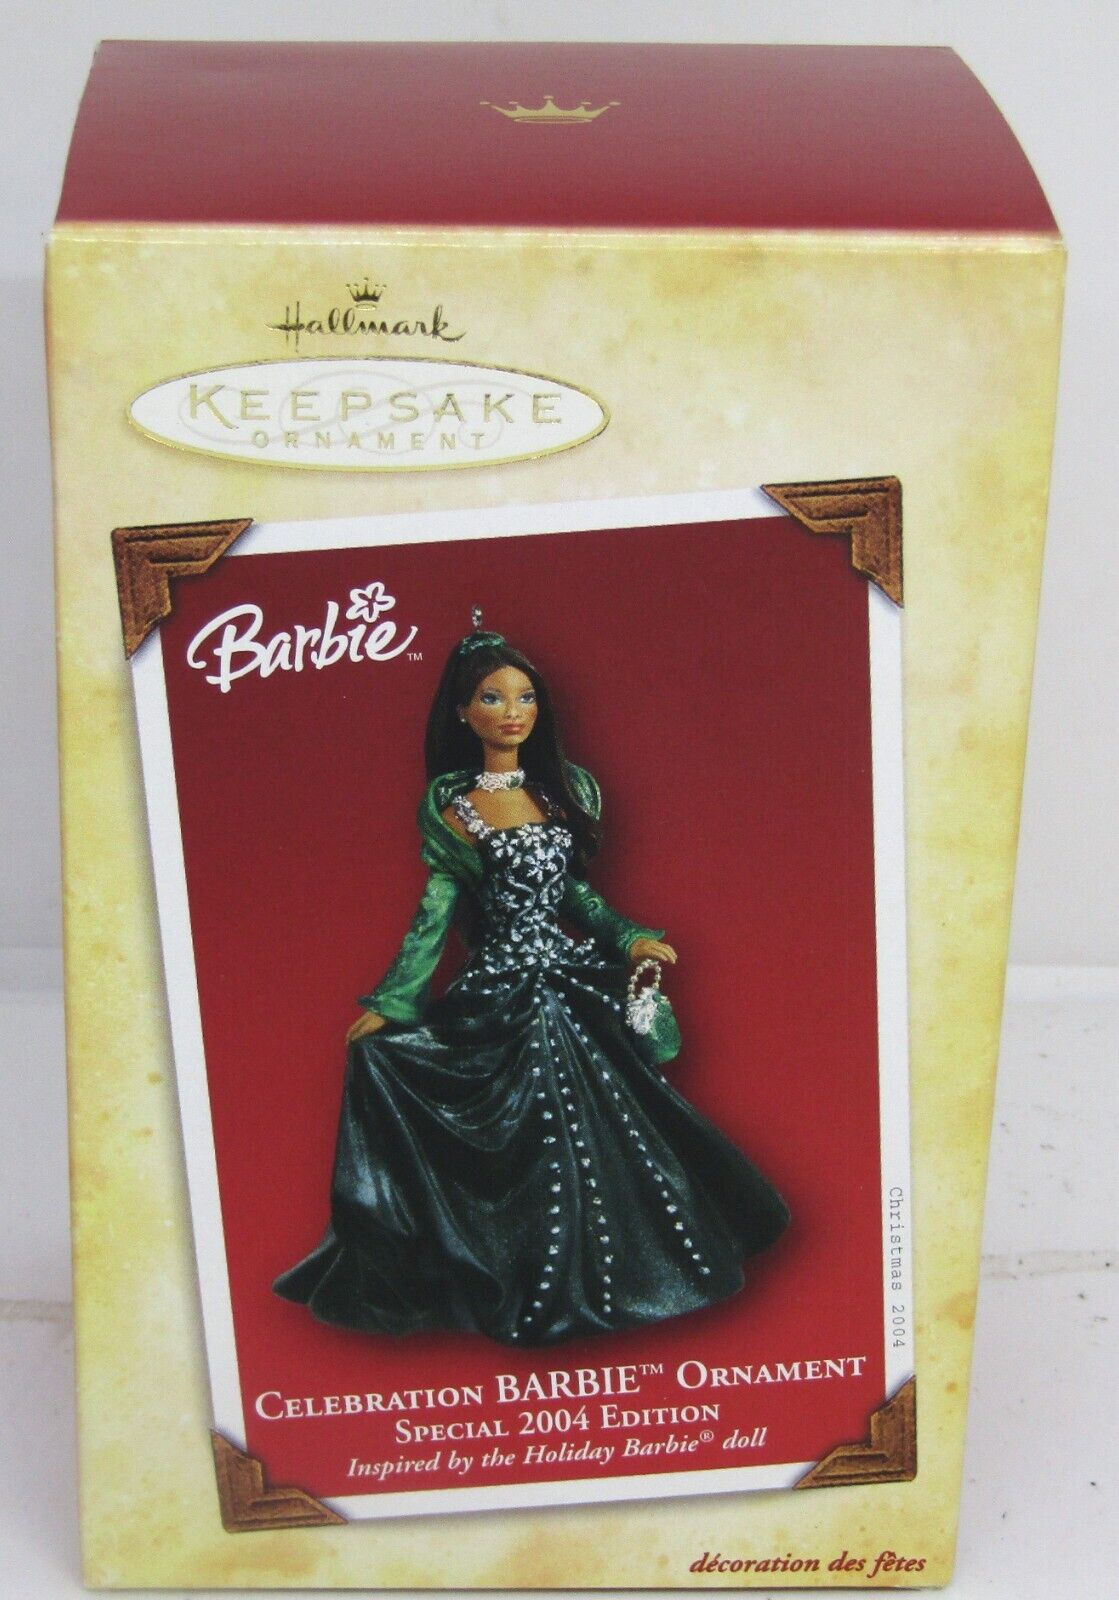 Hallmark Keepsake 2004 Barbie, Celebrations Barbie Special Edition, Ornament.